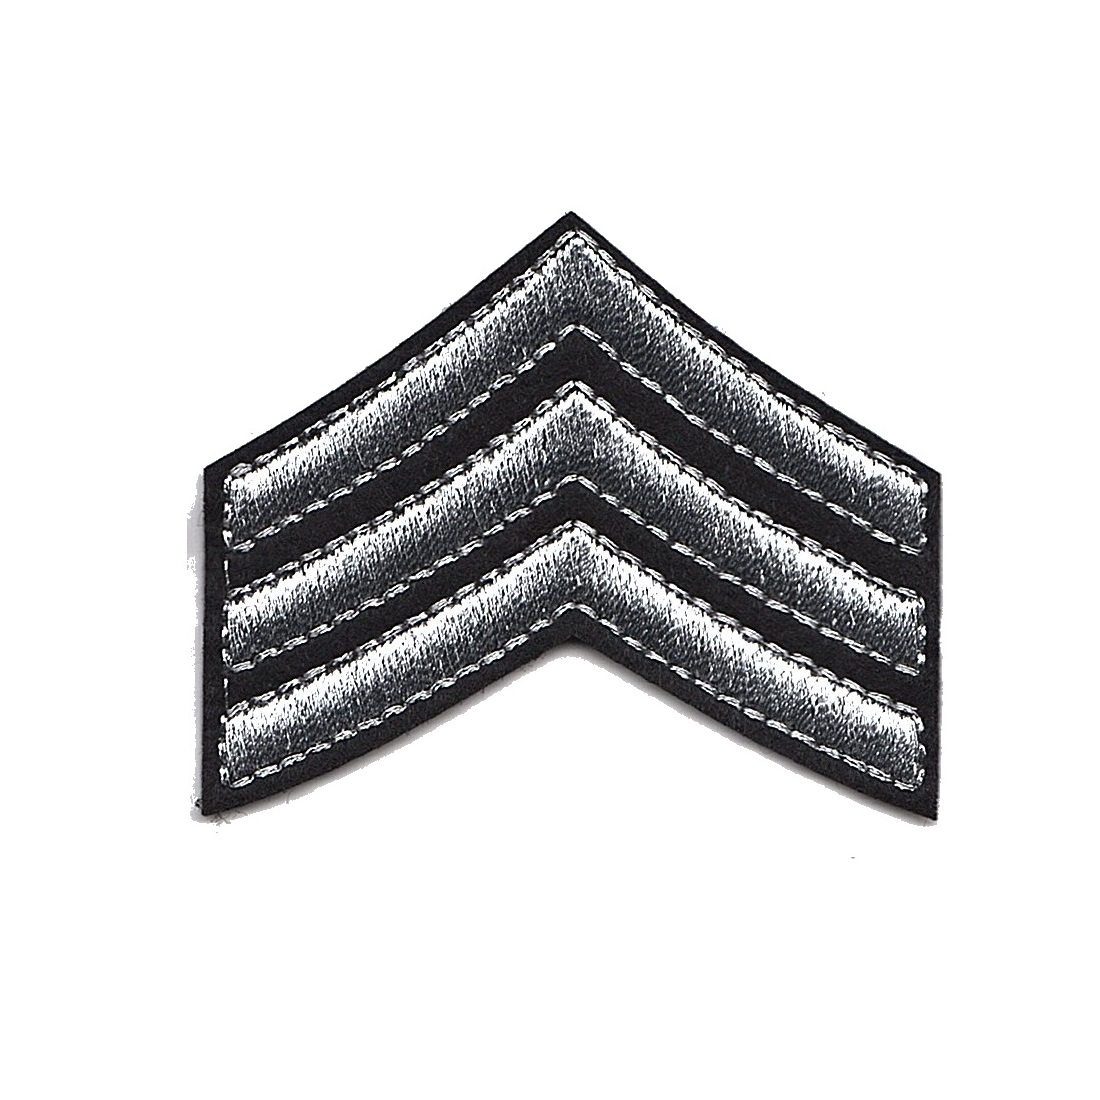 Sergeant stripes (Silver)